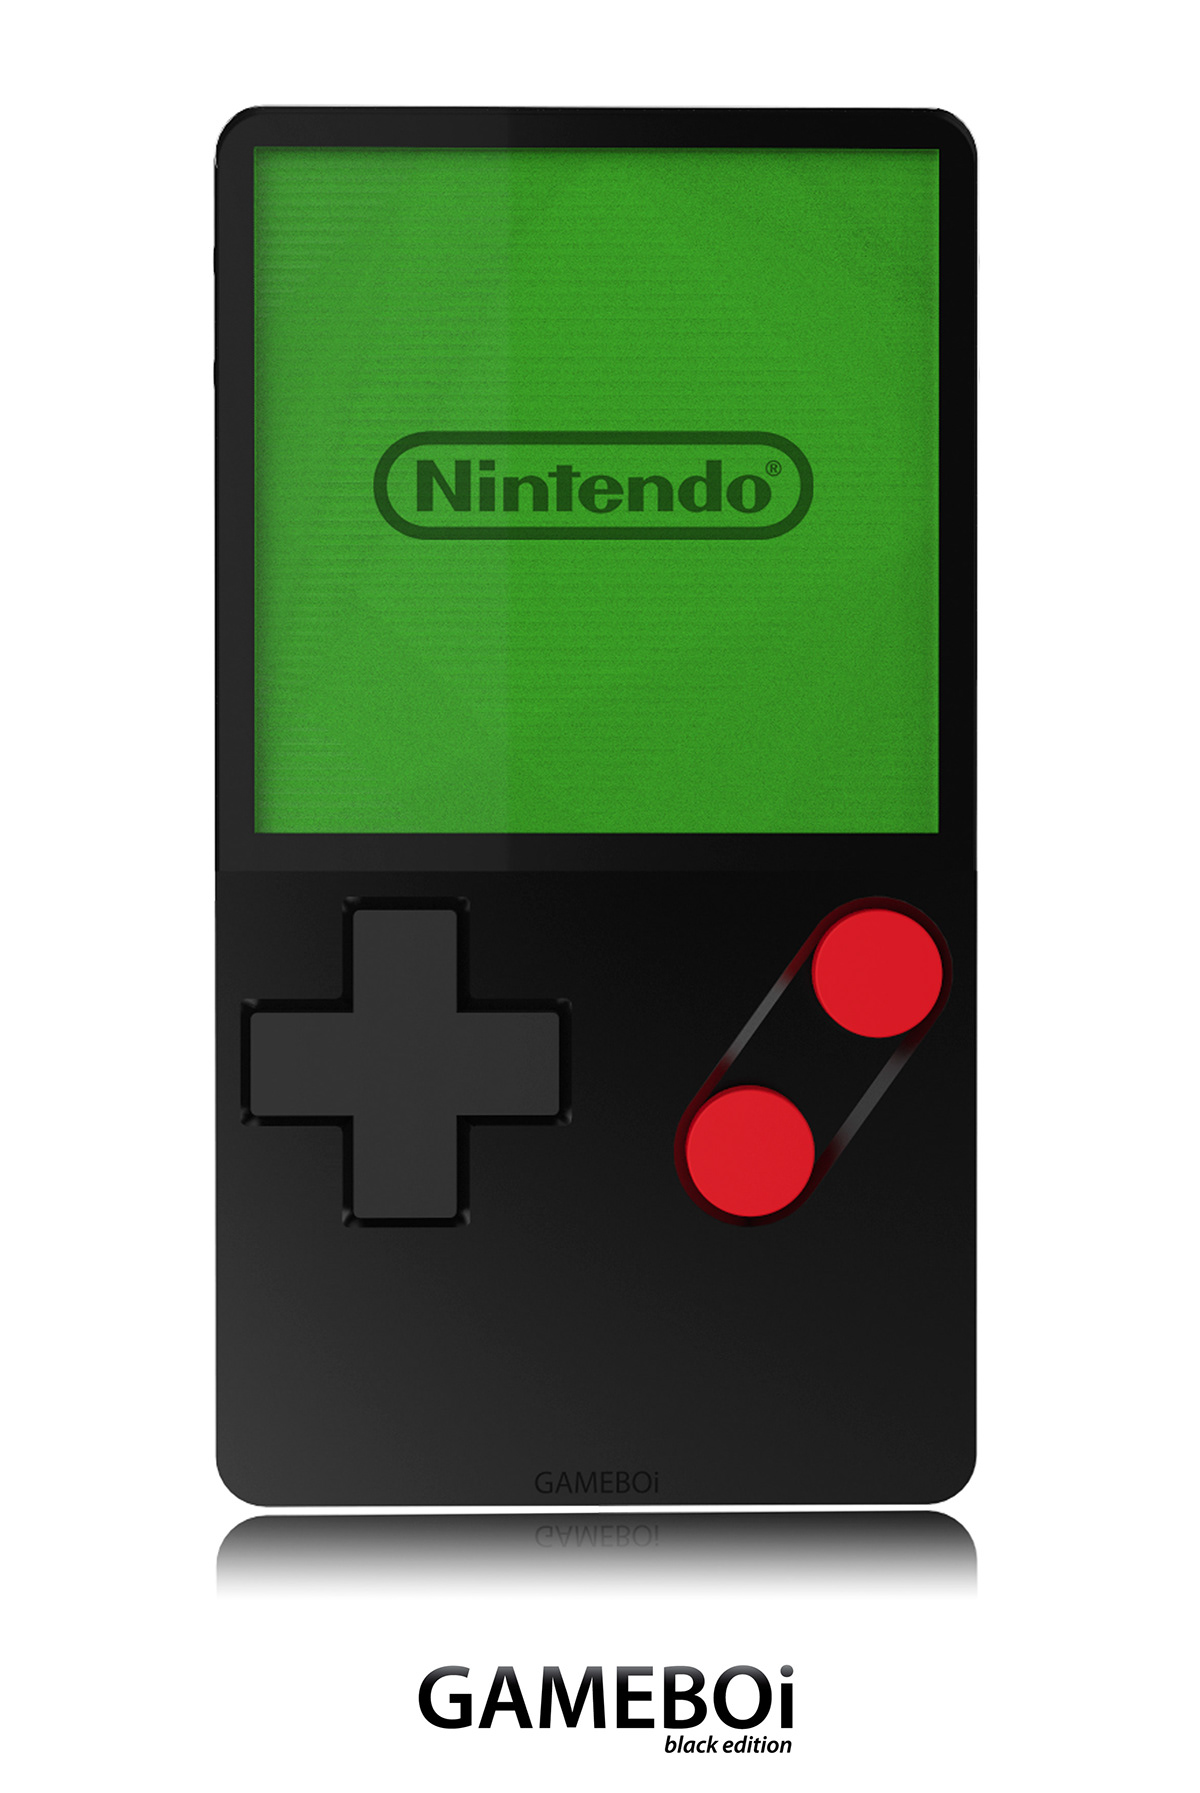 Nintendo black is beautiful Retro redesign remake game boy gameboy gameboi Super Mario tetris